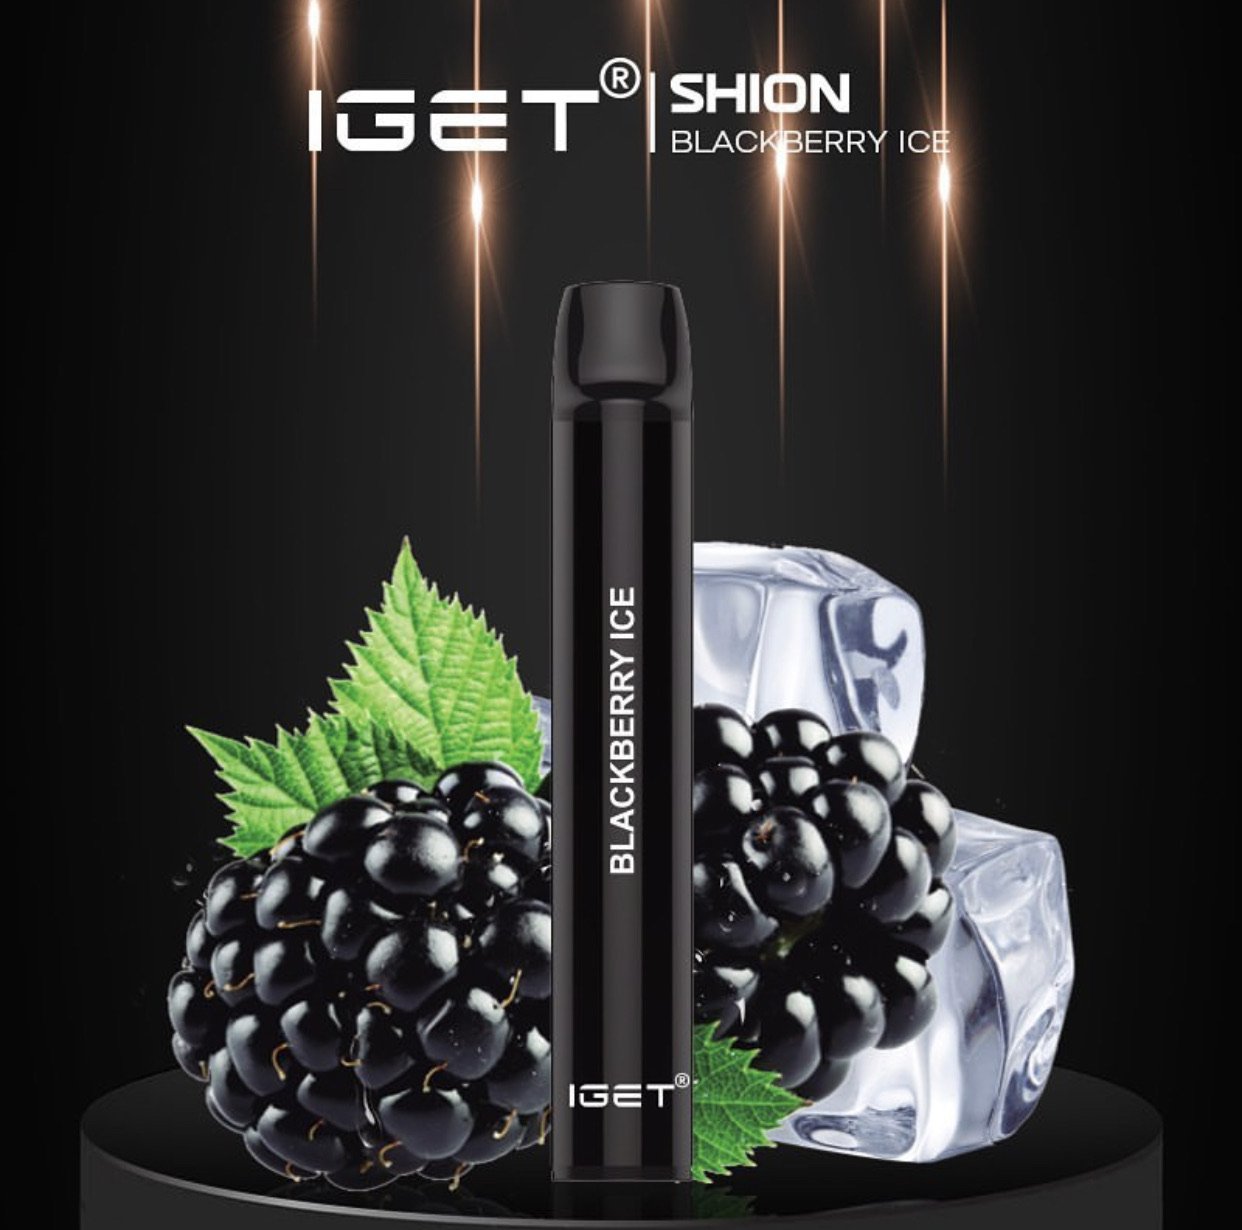 blackberry-ice-iget-shion-poster.jpg